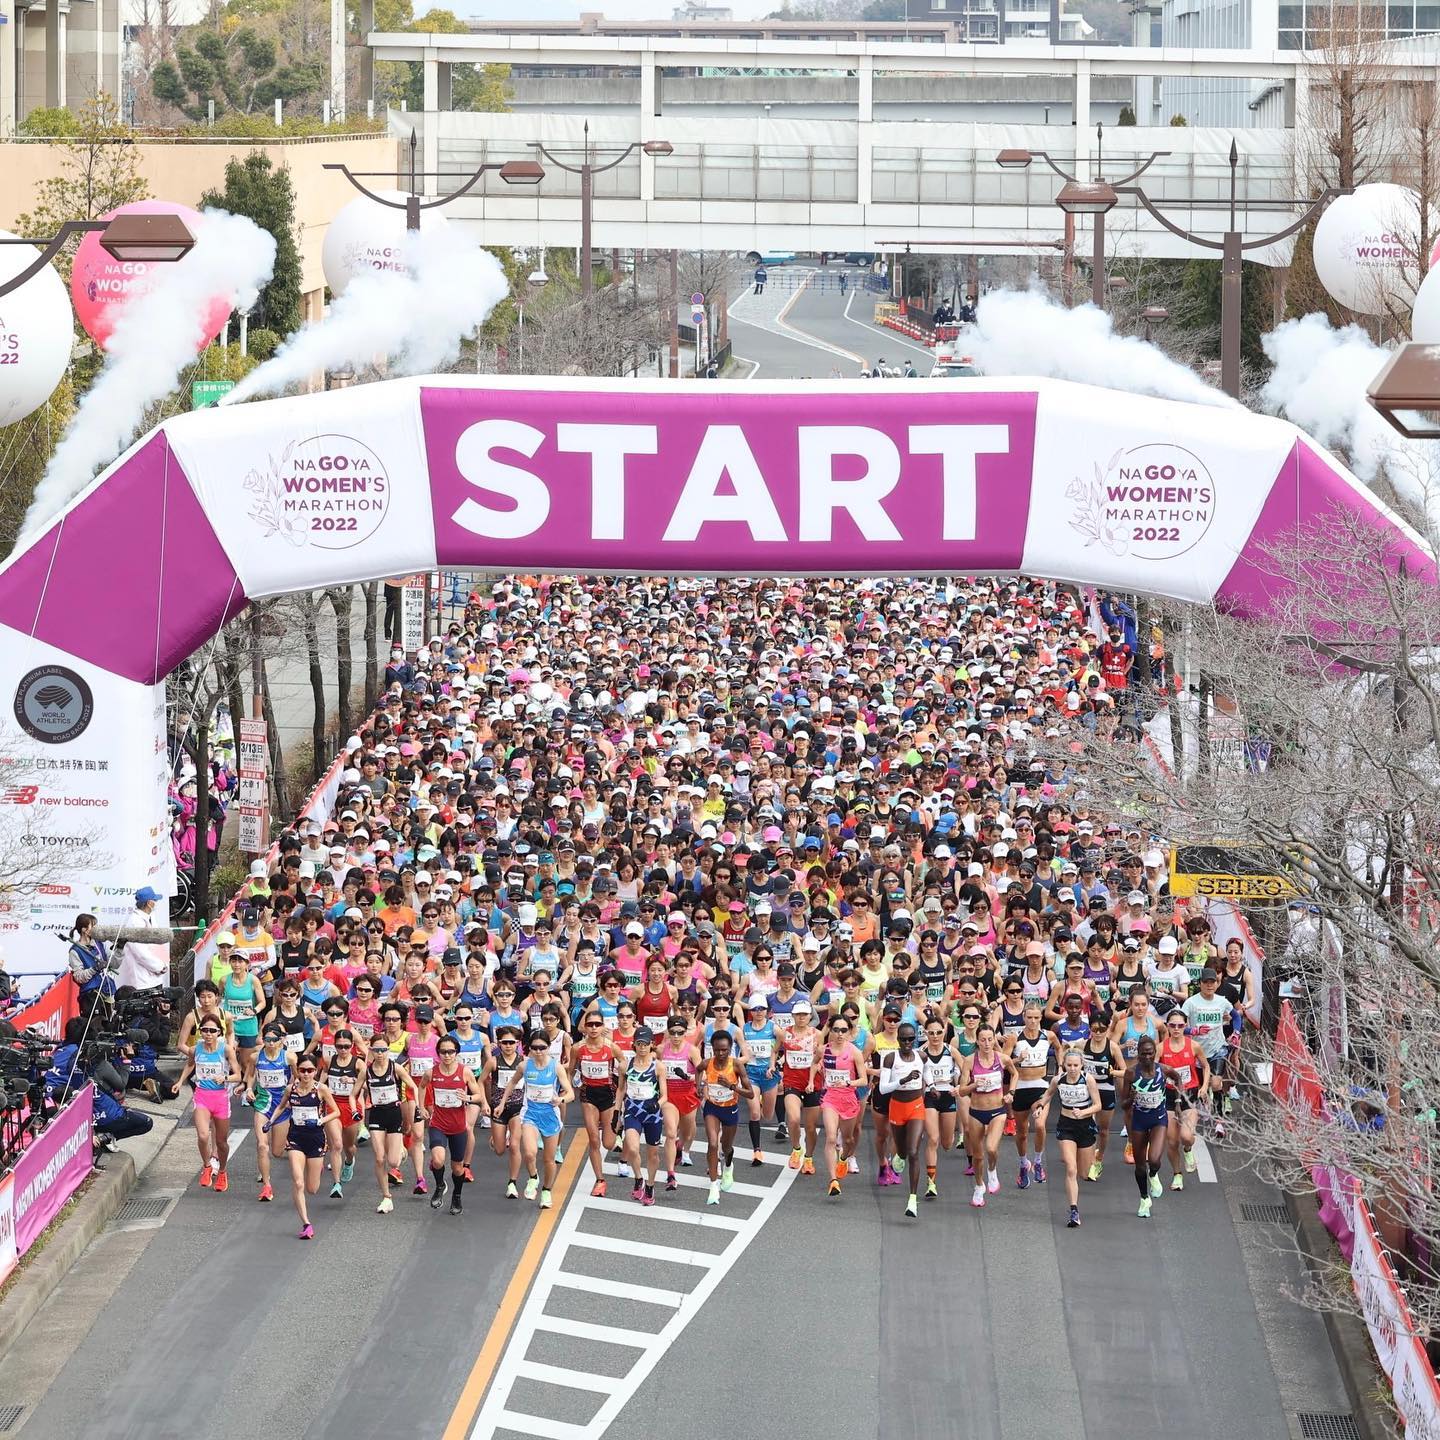 Chepngetich runs historic 2:17:18 to win Nagoya Women’s Marathon